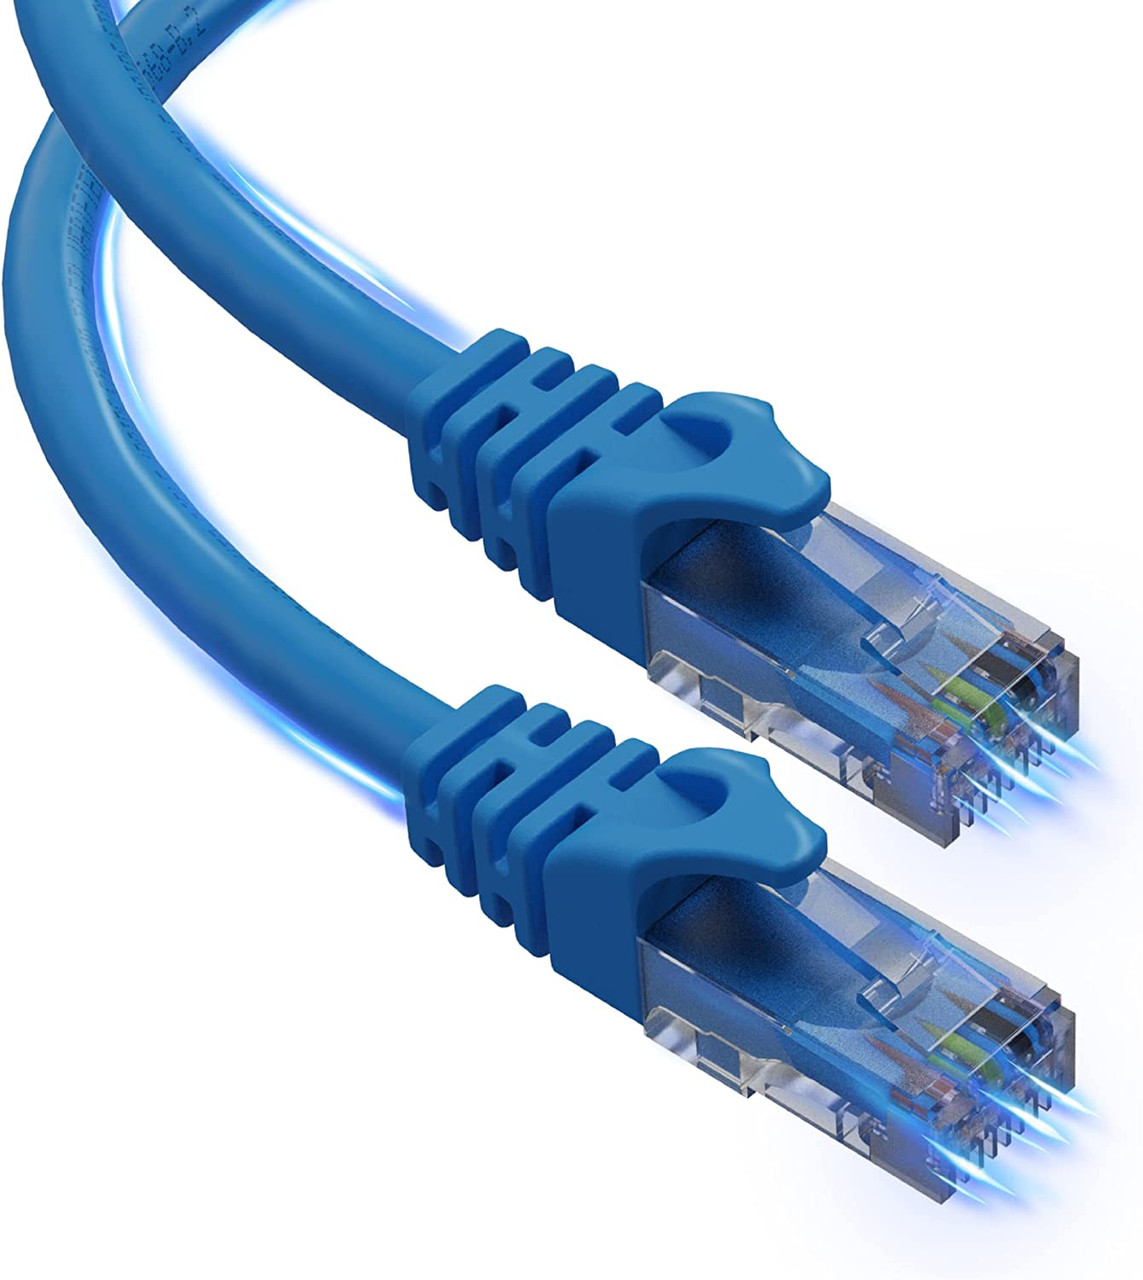 Cat6 Ethernet Cable 75 ft - RJ45 LAN UTP CAT 6 Network Cord Patch Long Internet Cable - 75 Feet - Blue